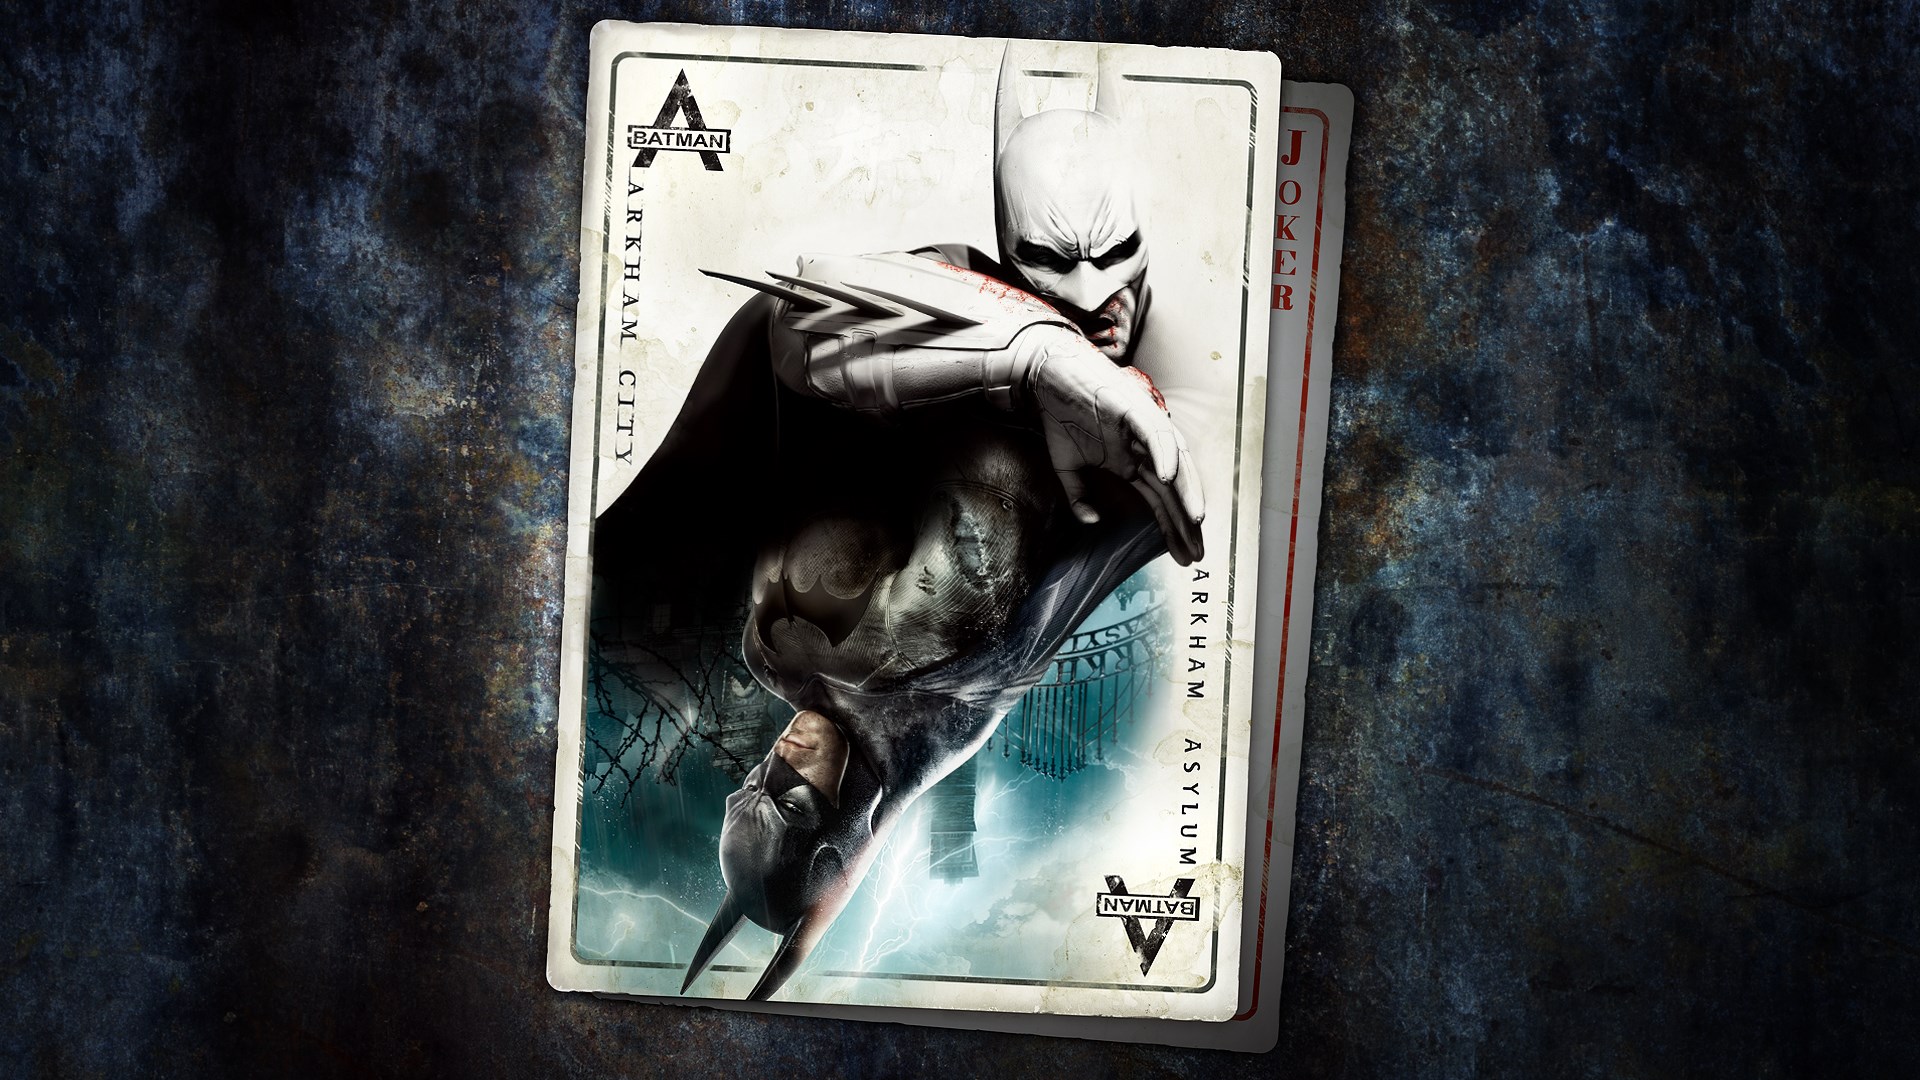 Warner confirma coletânea Batman: Return to Arkham para julho